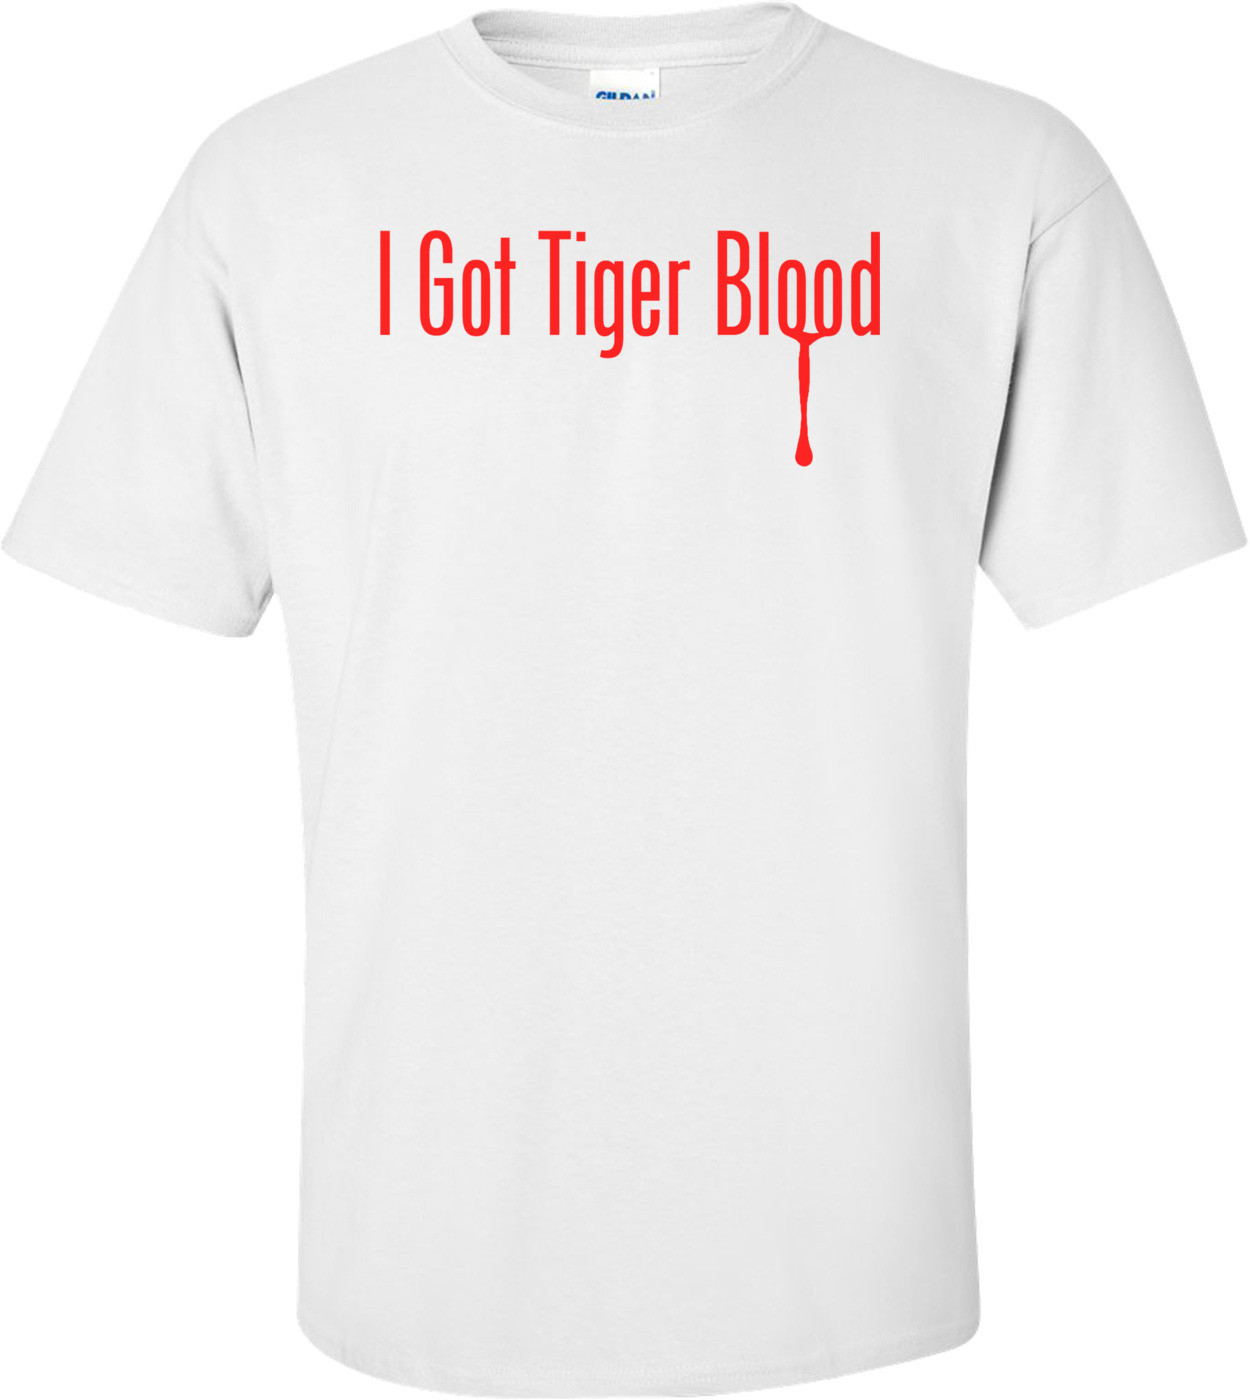 I Got Tiger Blood - Charlie Sheen Shirt